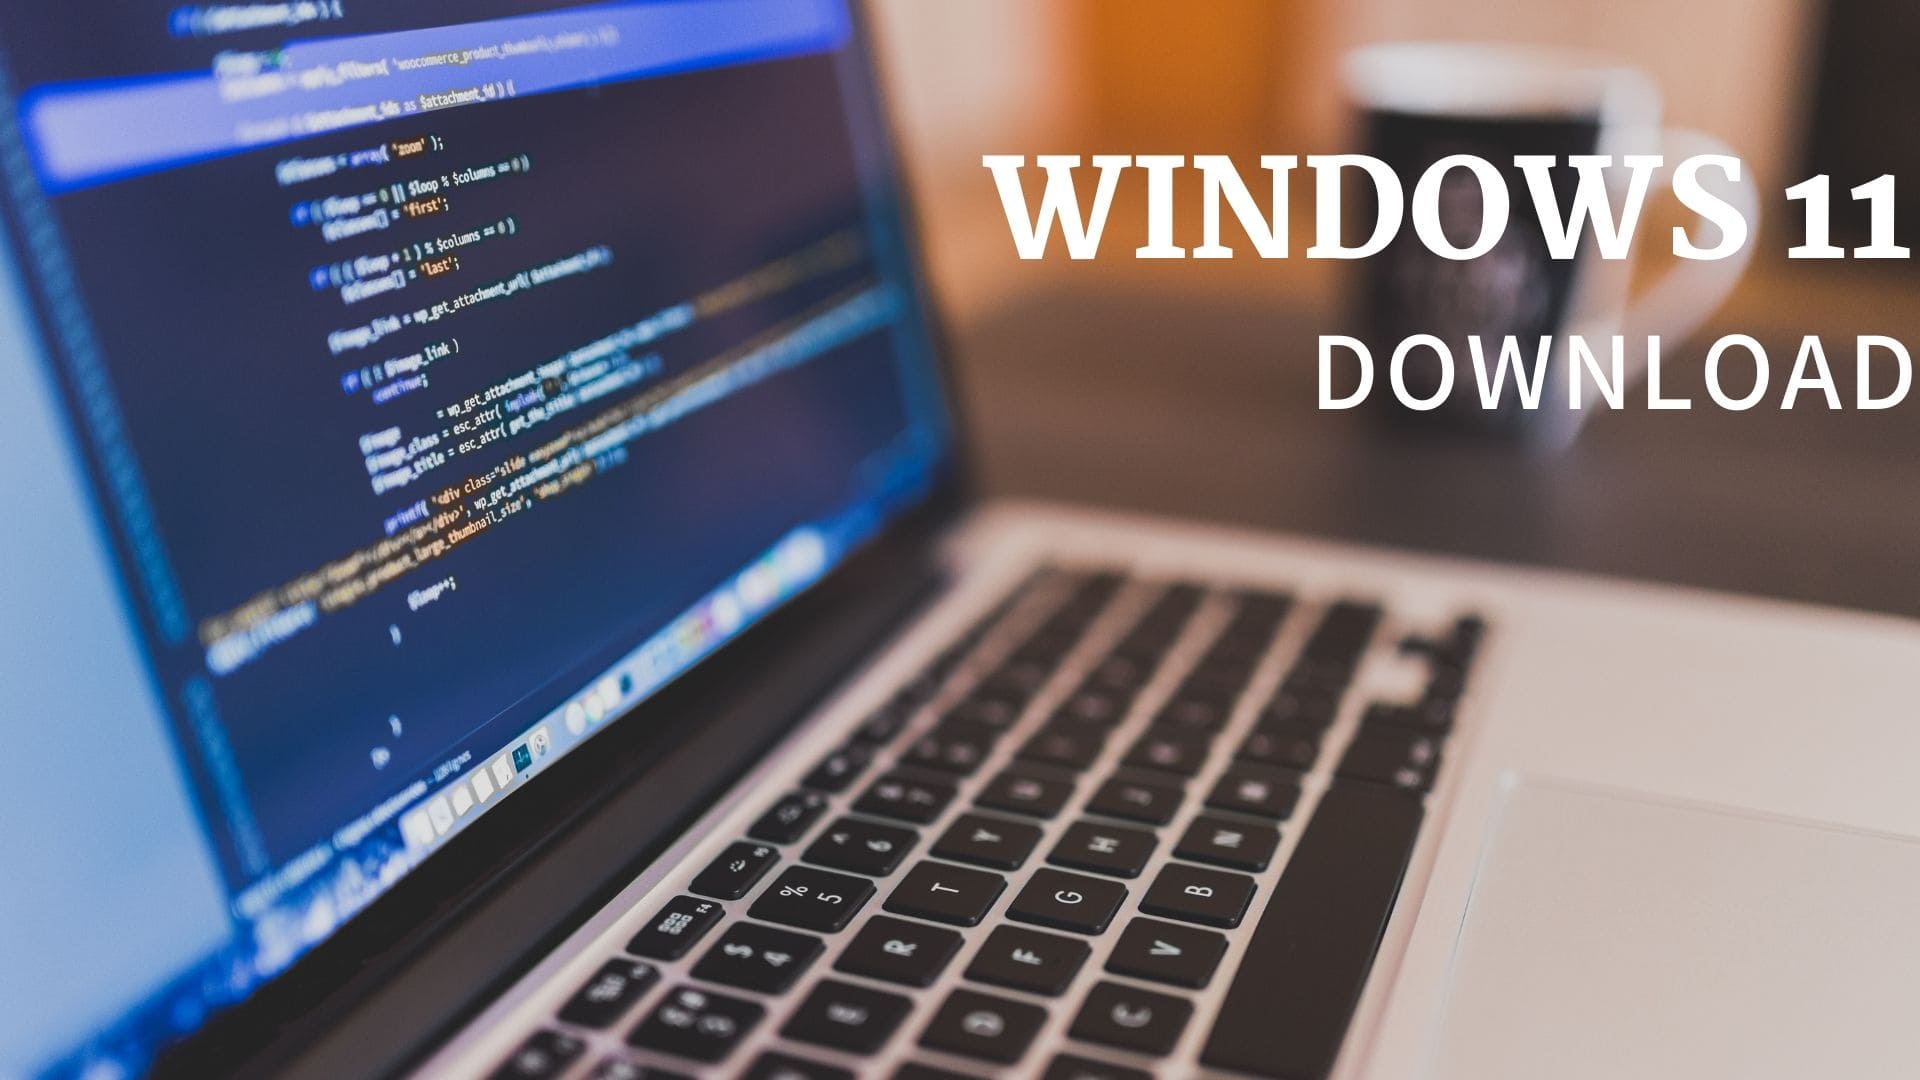 download windows 11